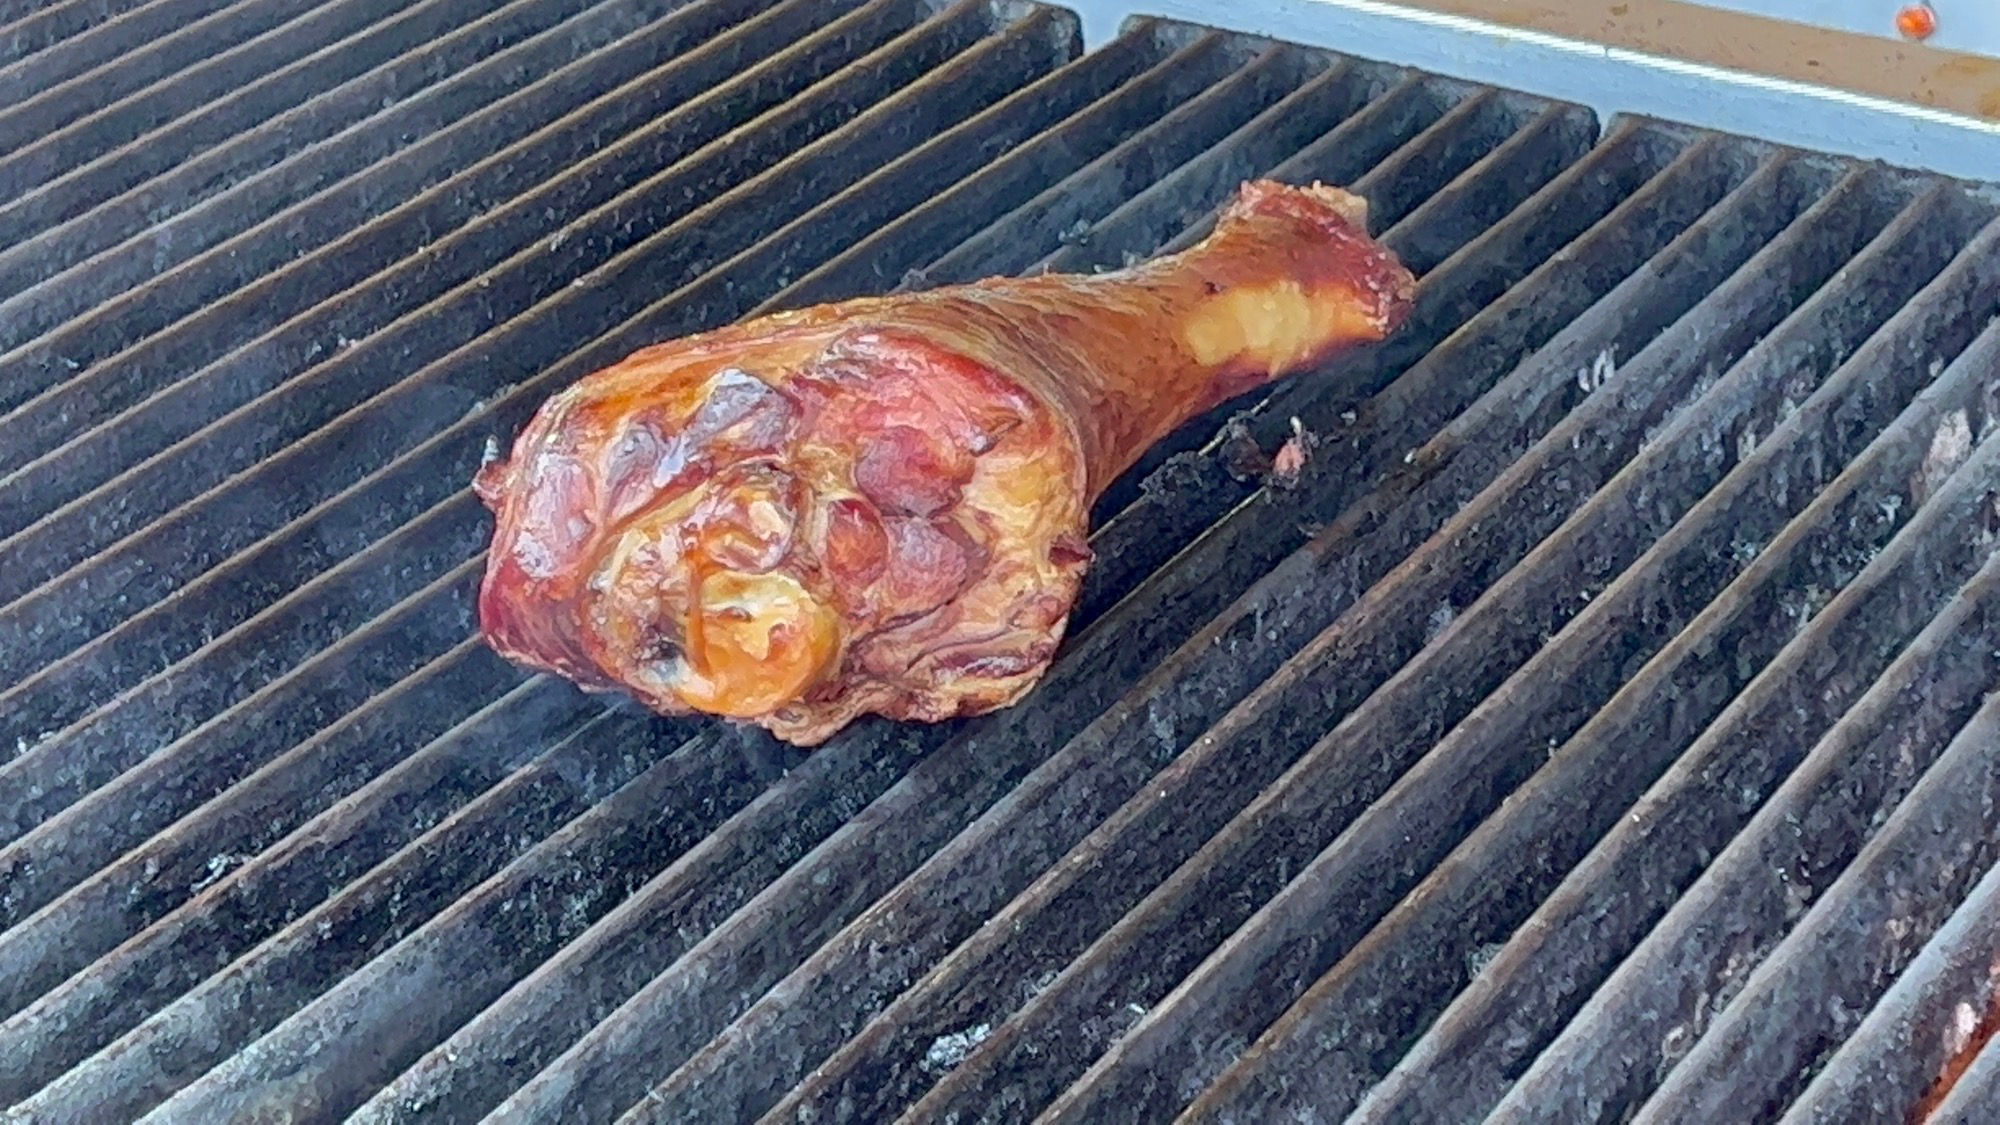 Fireman's BBQ Smoked Turkey Leg